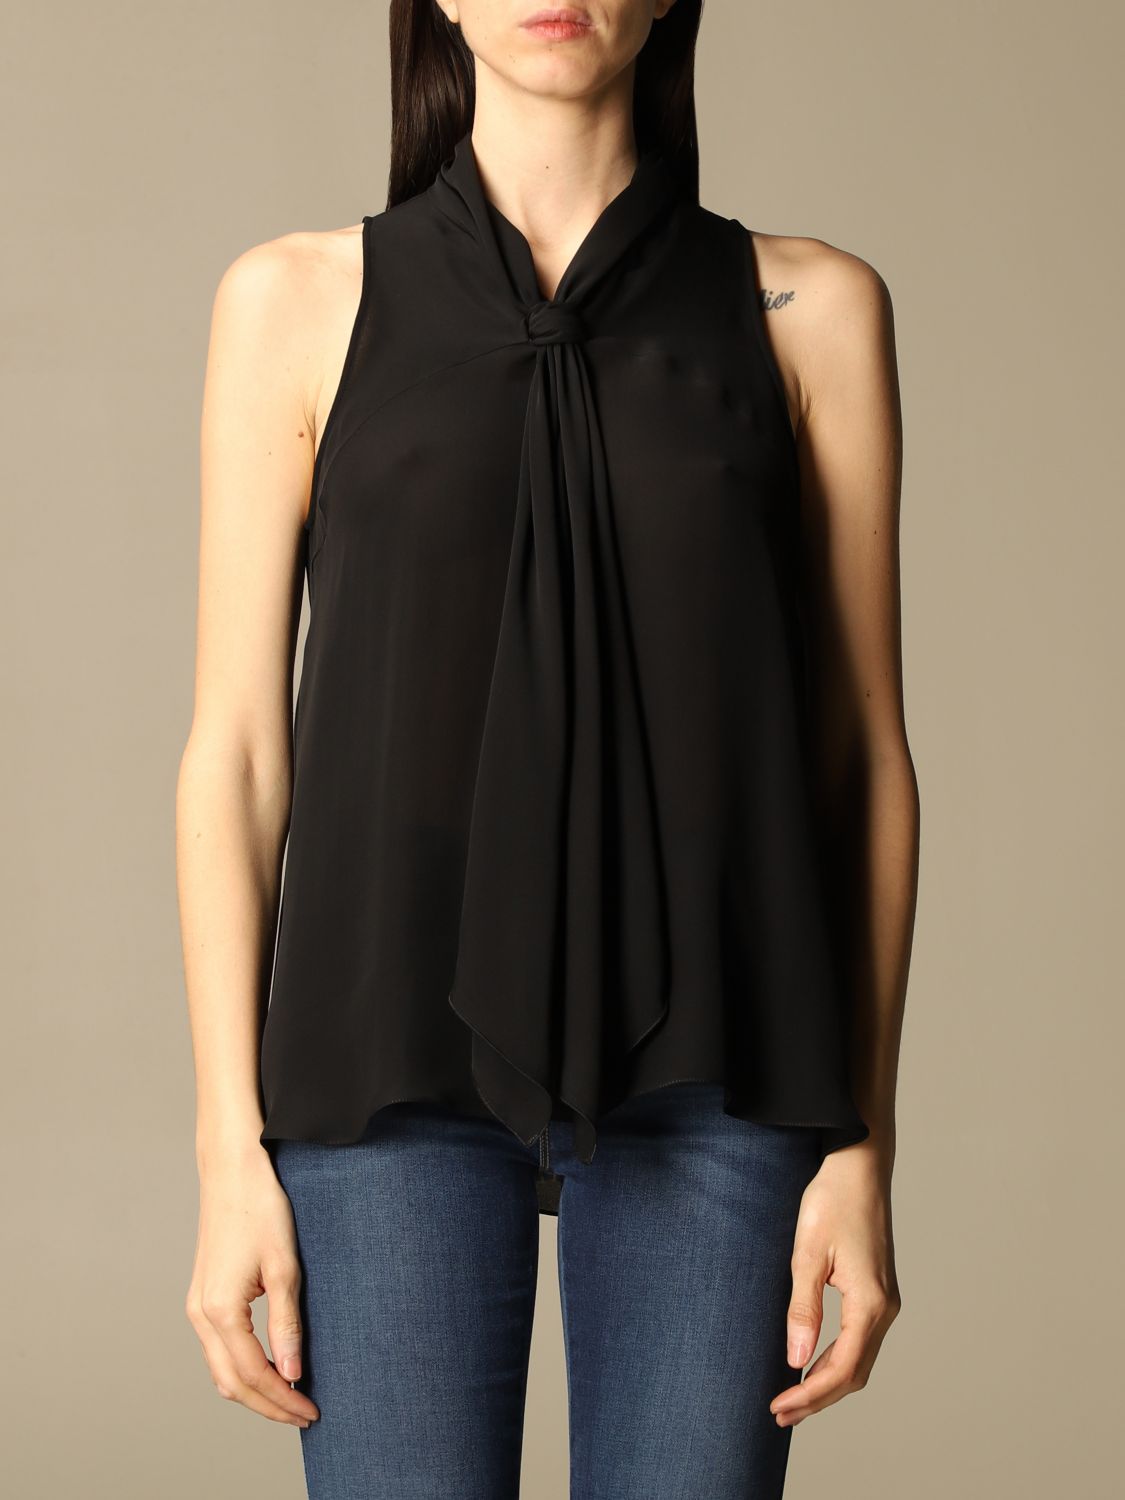 EMPORIO ARMANI: silk top with sash - Black | Emporio Armani top ANK13T  A2306 online on 